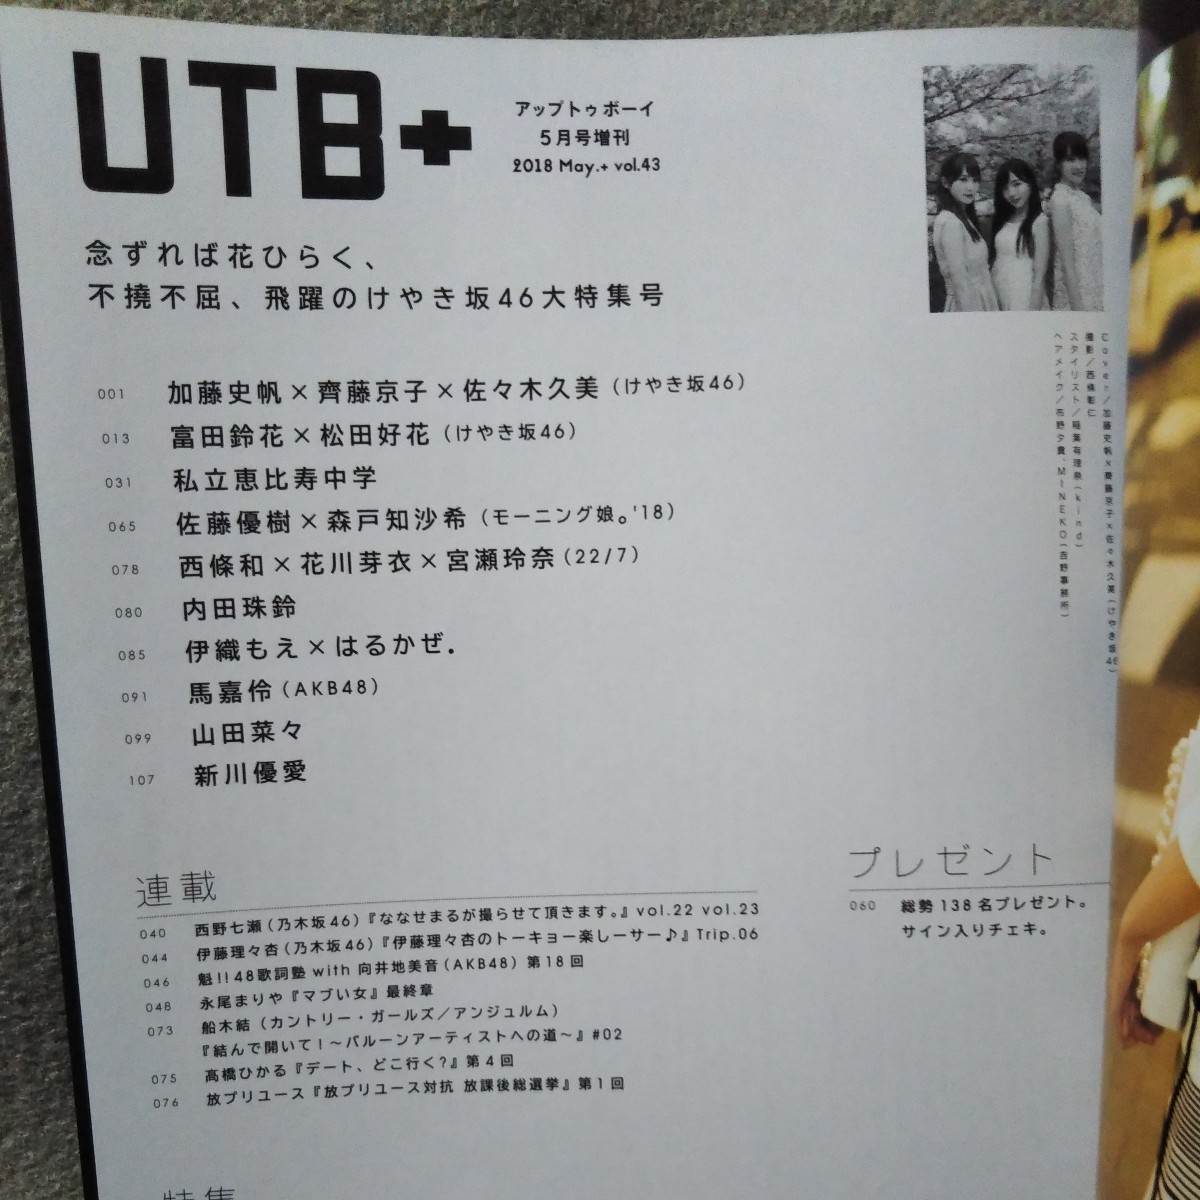  Mucc book@)UTB+(UP TO BOY PLUS)2018/5 vol.43 zelkova slope 46 Kato x capital .x. beautiful Tomita x. flower Shiritsu Ebisu Chuugaku mo.22/7. woven .. Shinkawa super love other including carriage 